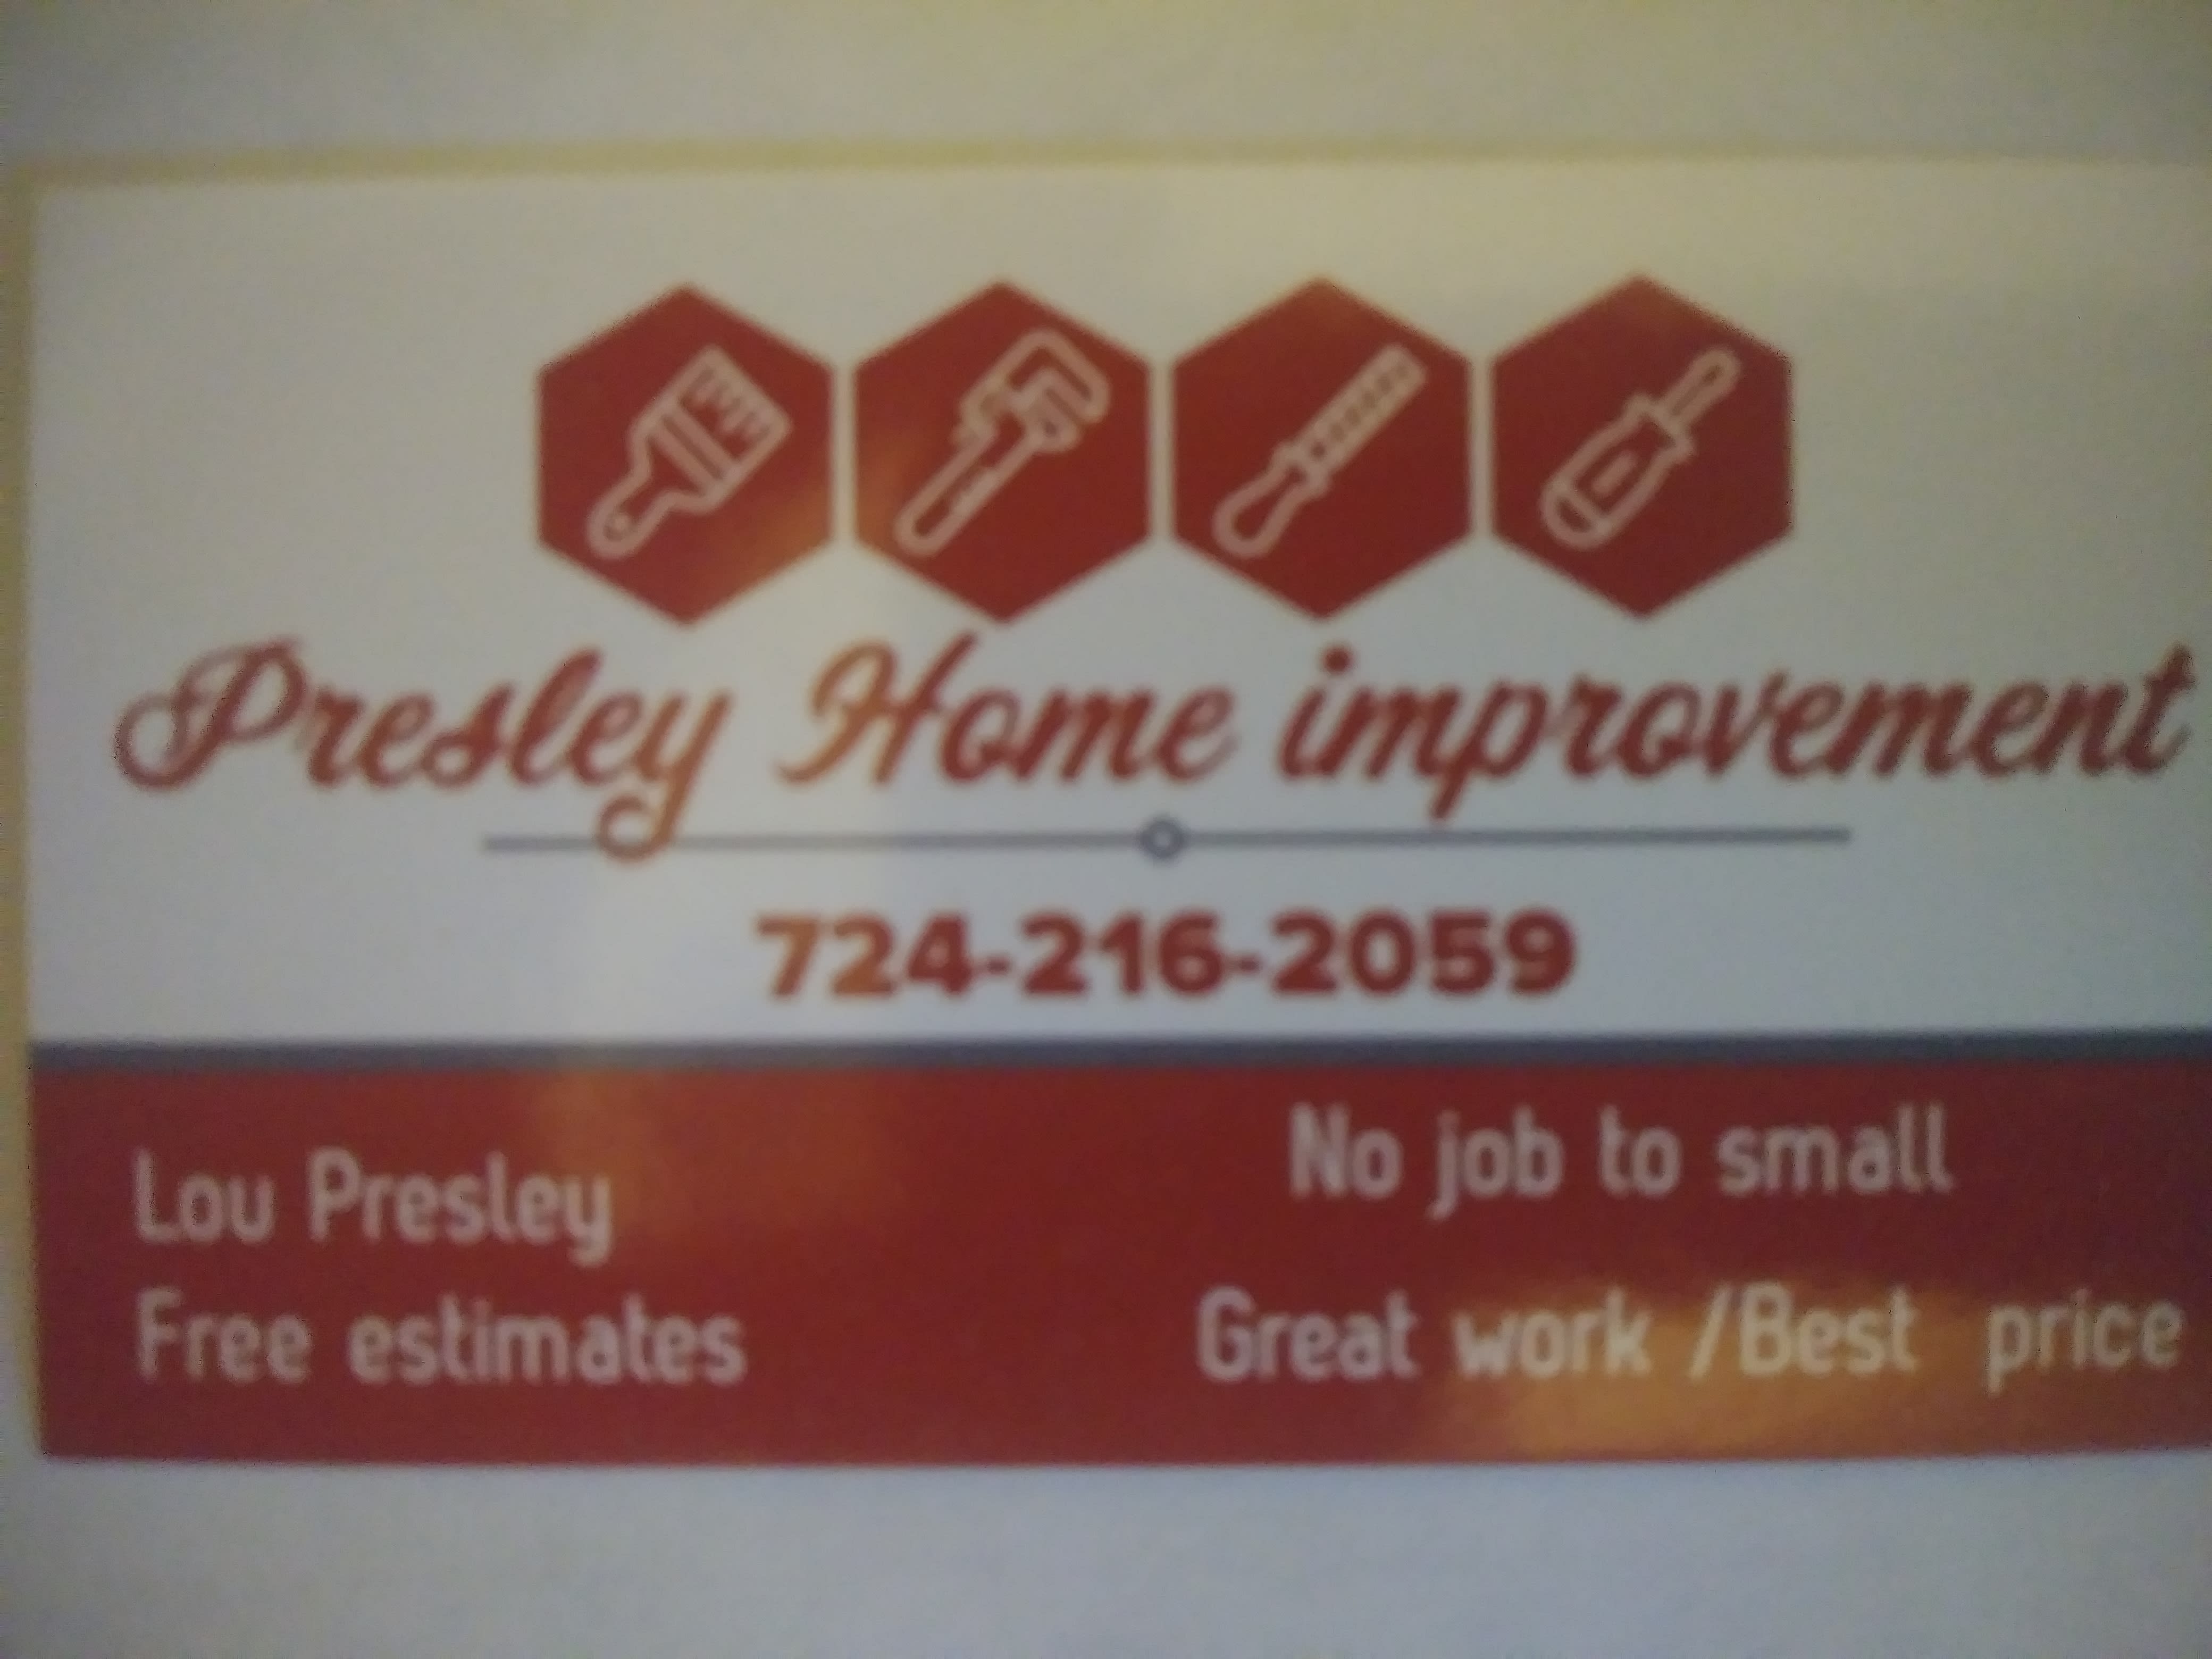 Presley Home Improvement